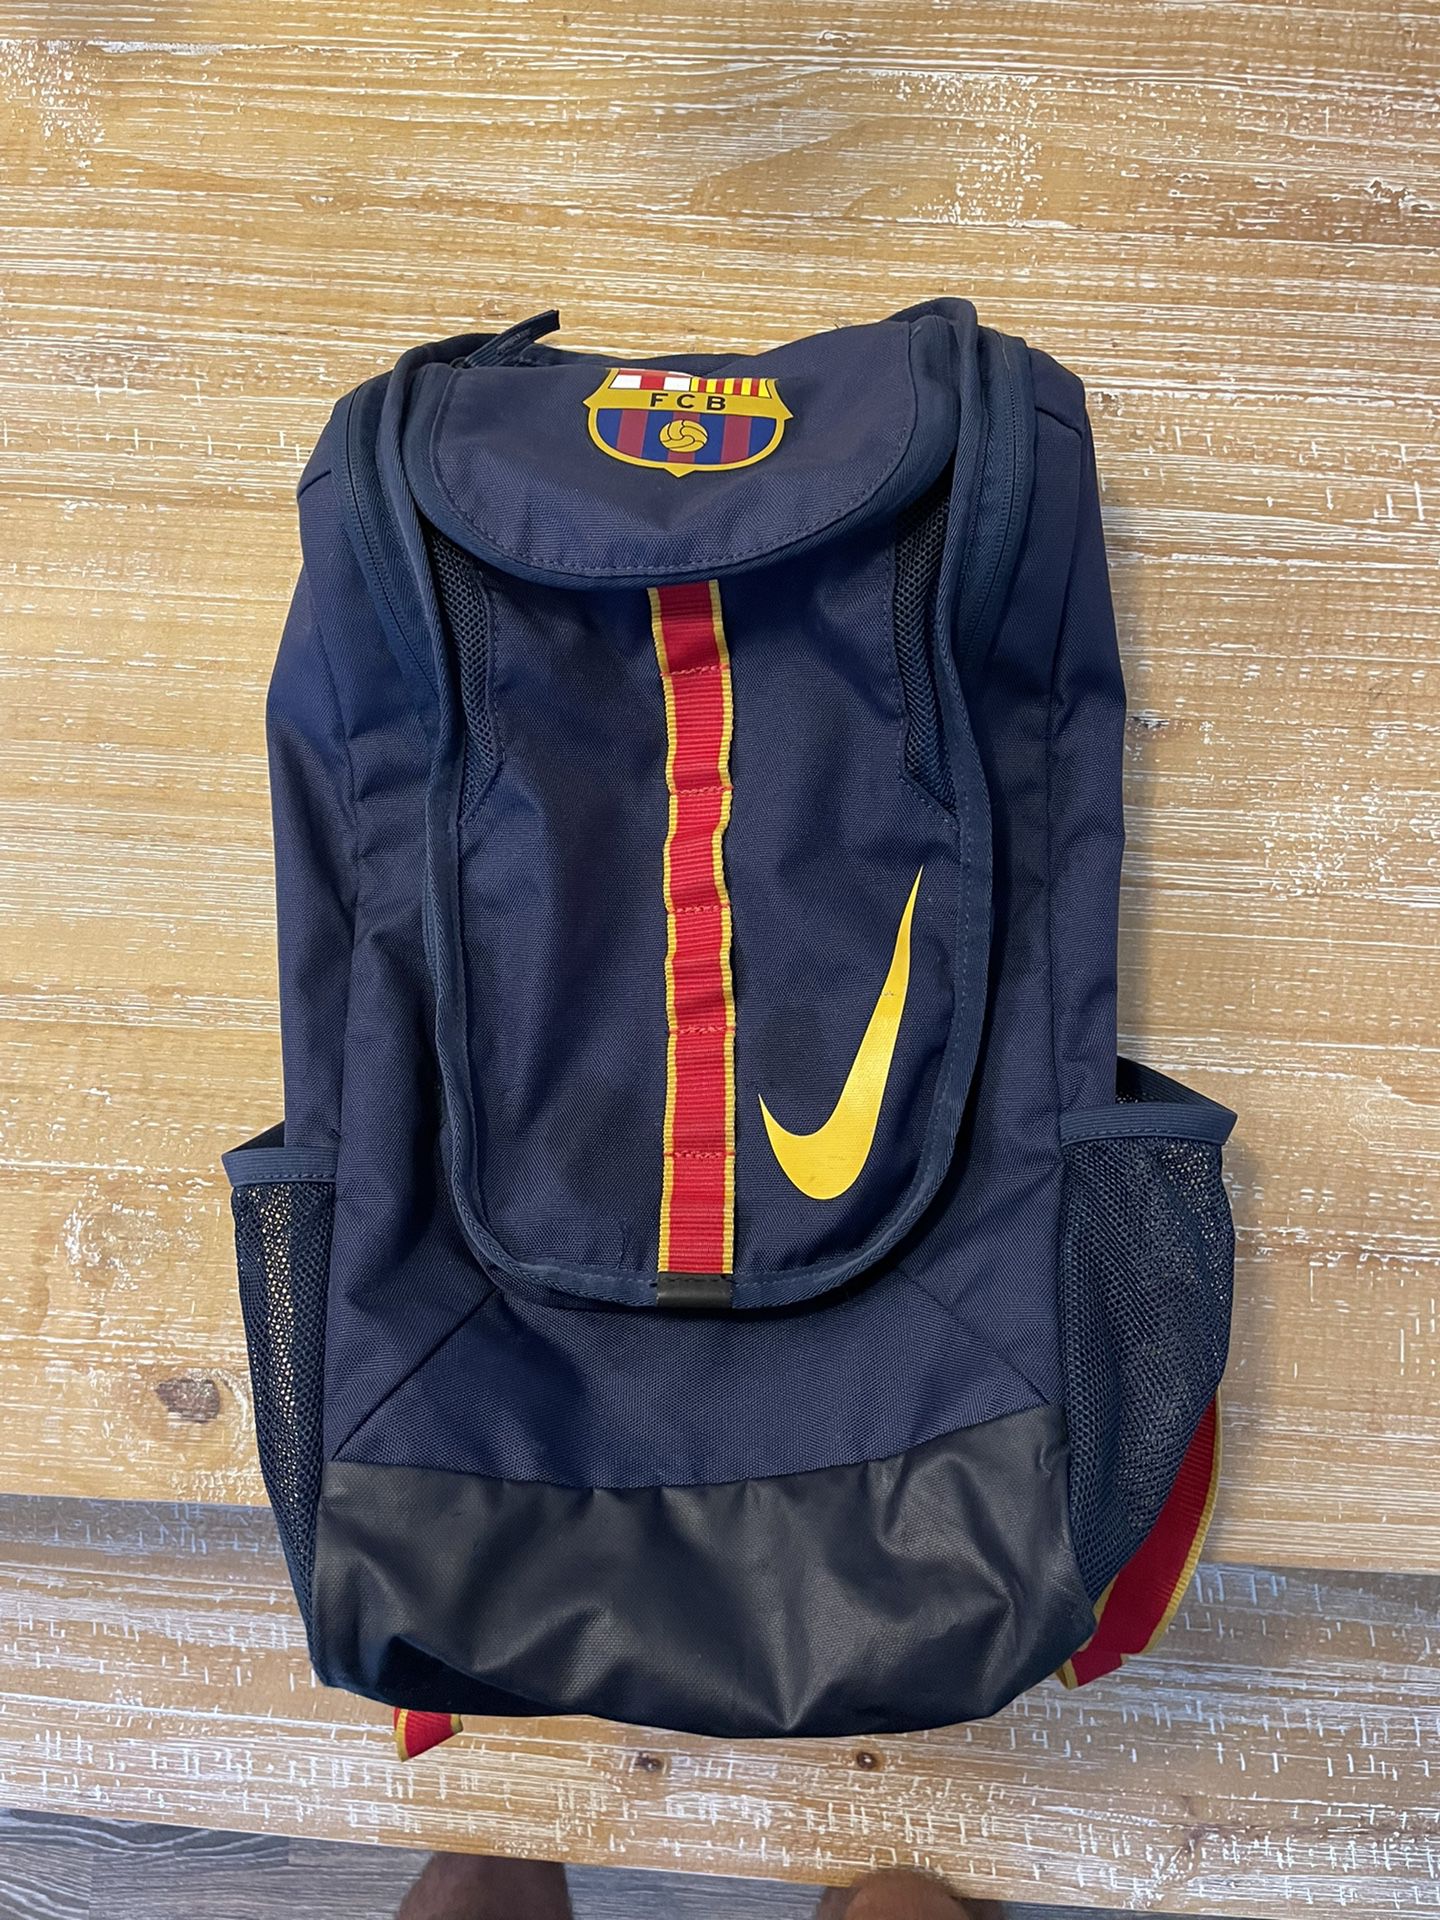 Nike / FC Barcelona Soccer Backpack